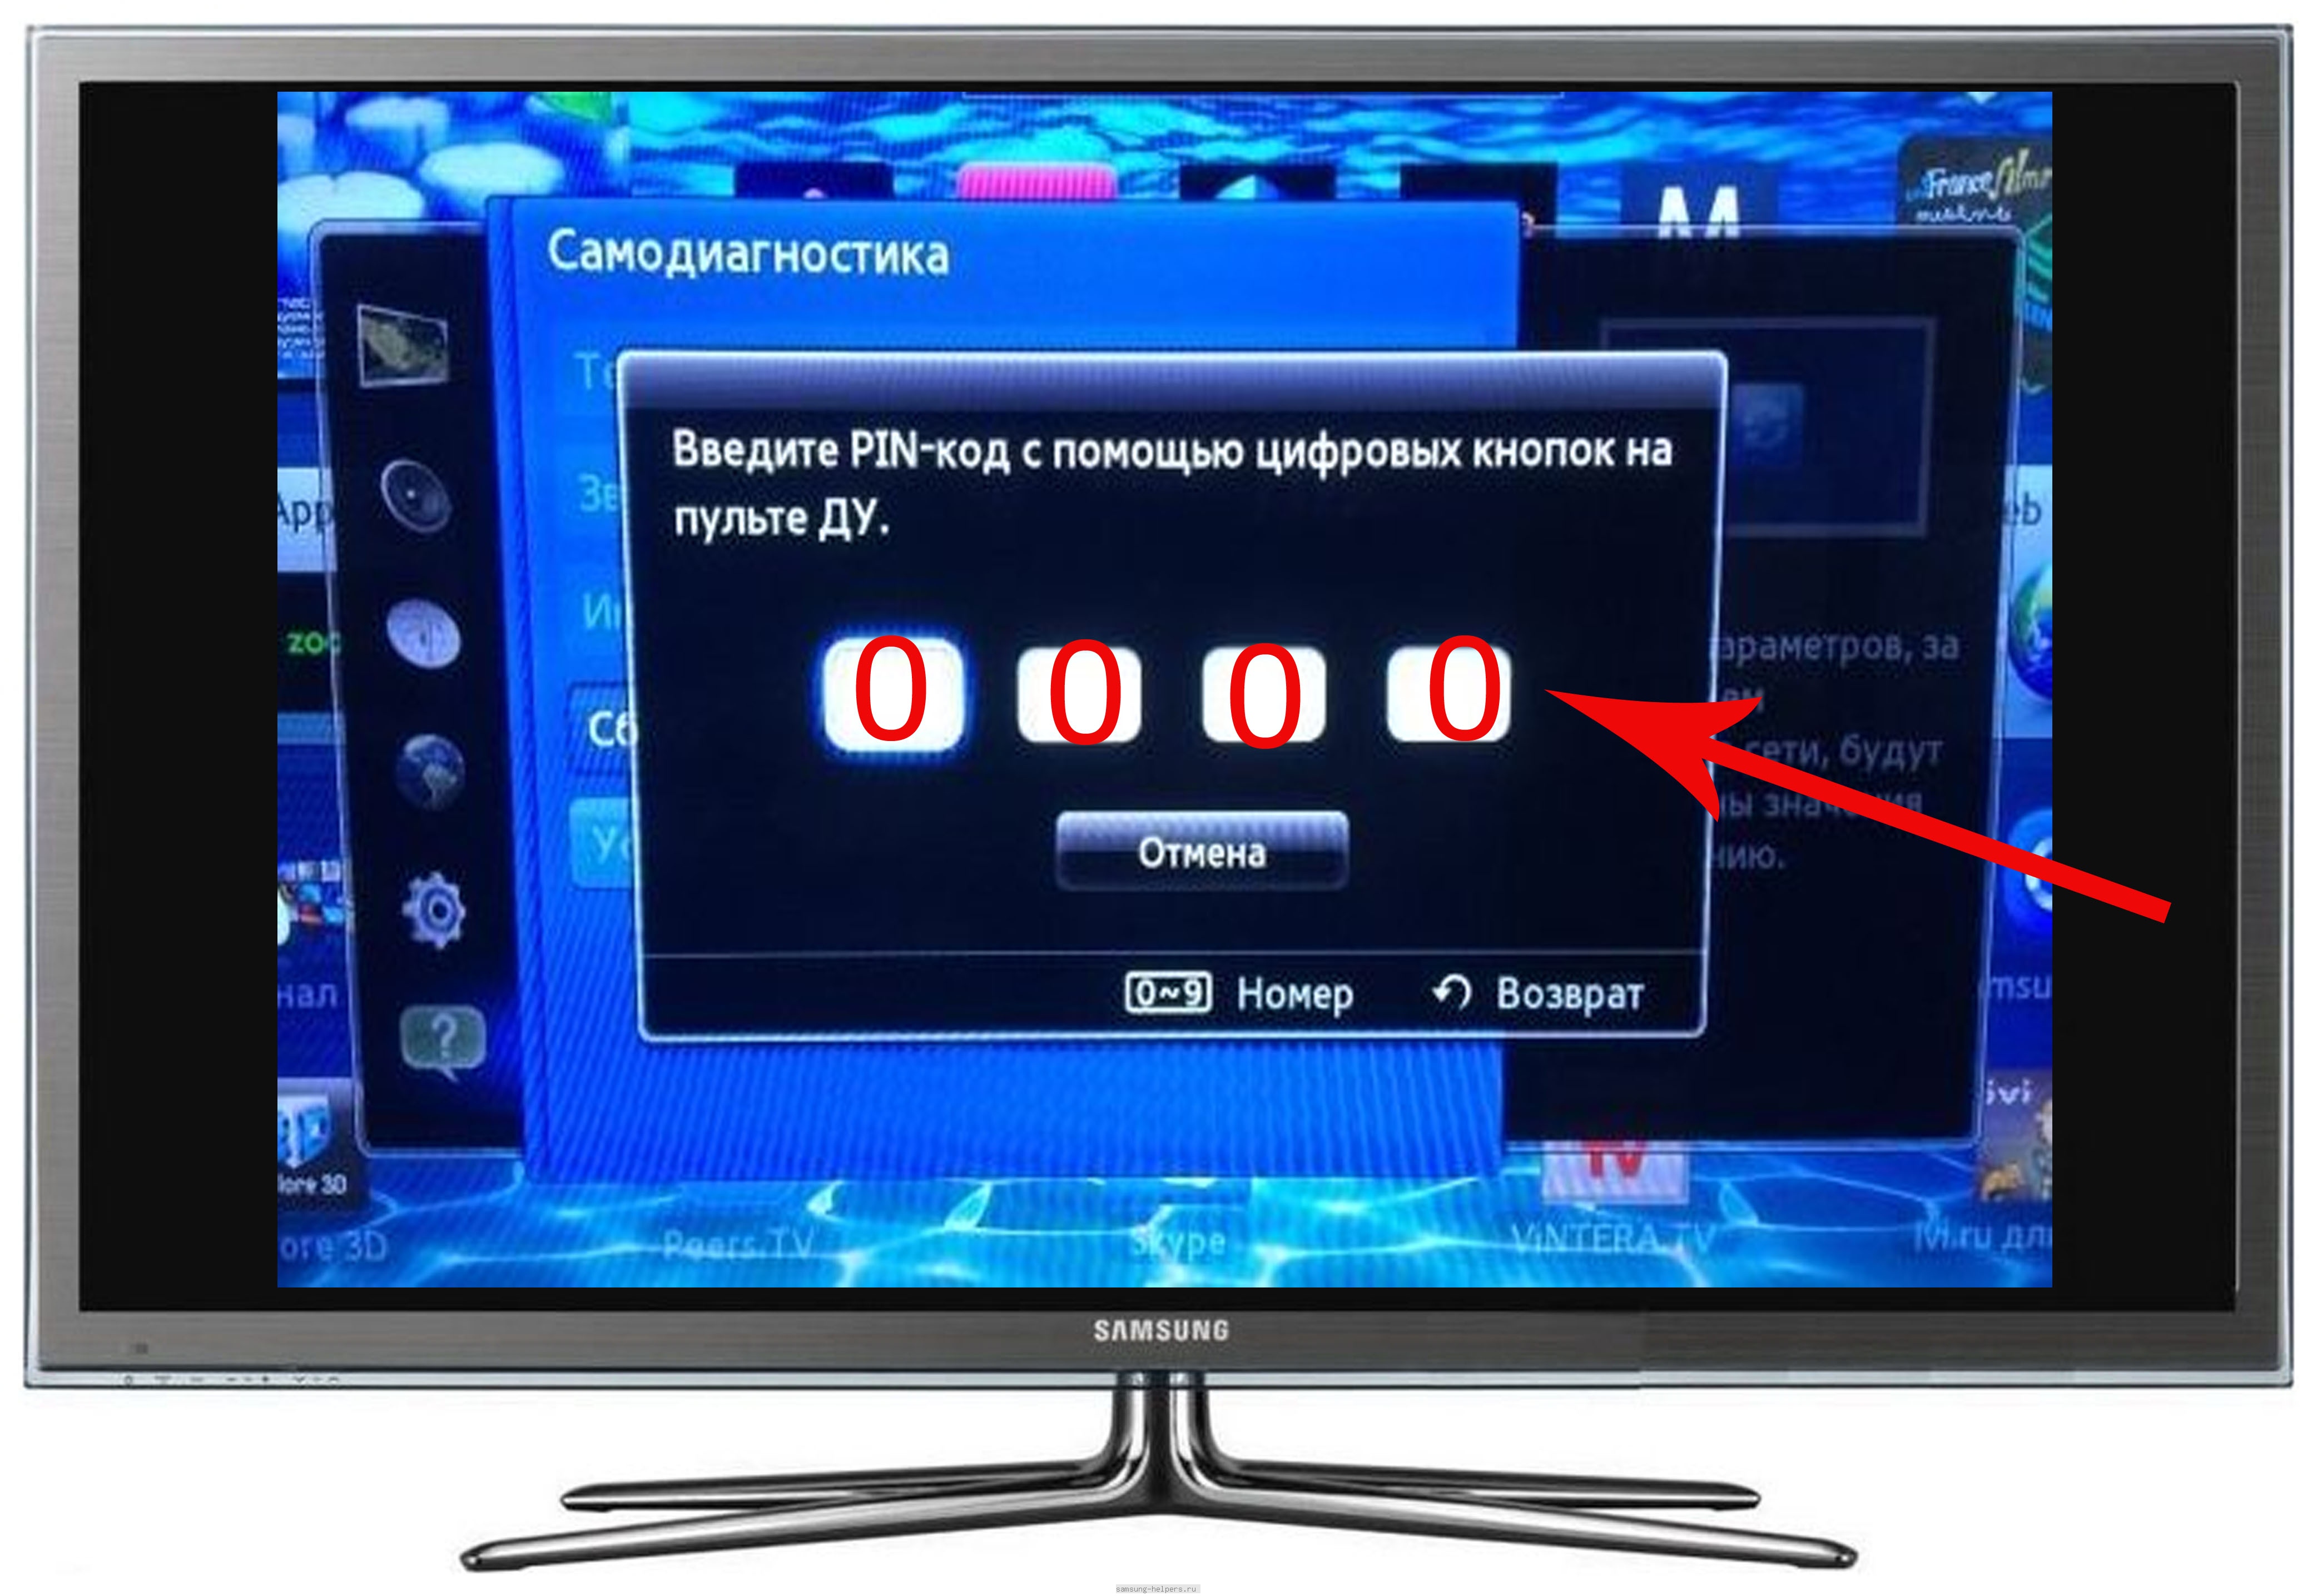 Телевизор просит код. Код для смарт ТВ самсунг телевизора Samsung. Пин код телевизора Samsung Smart TV. Разблокировка телевизора. Пин код на телевизоре самсунг.